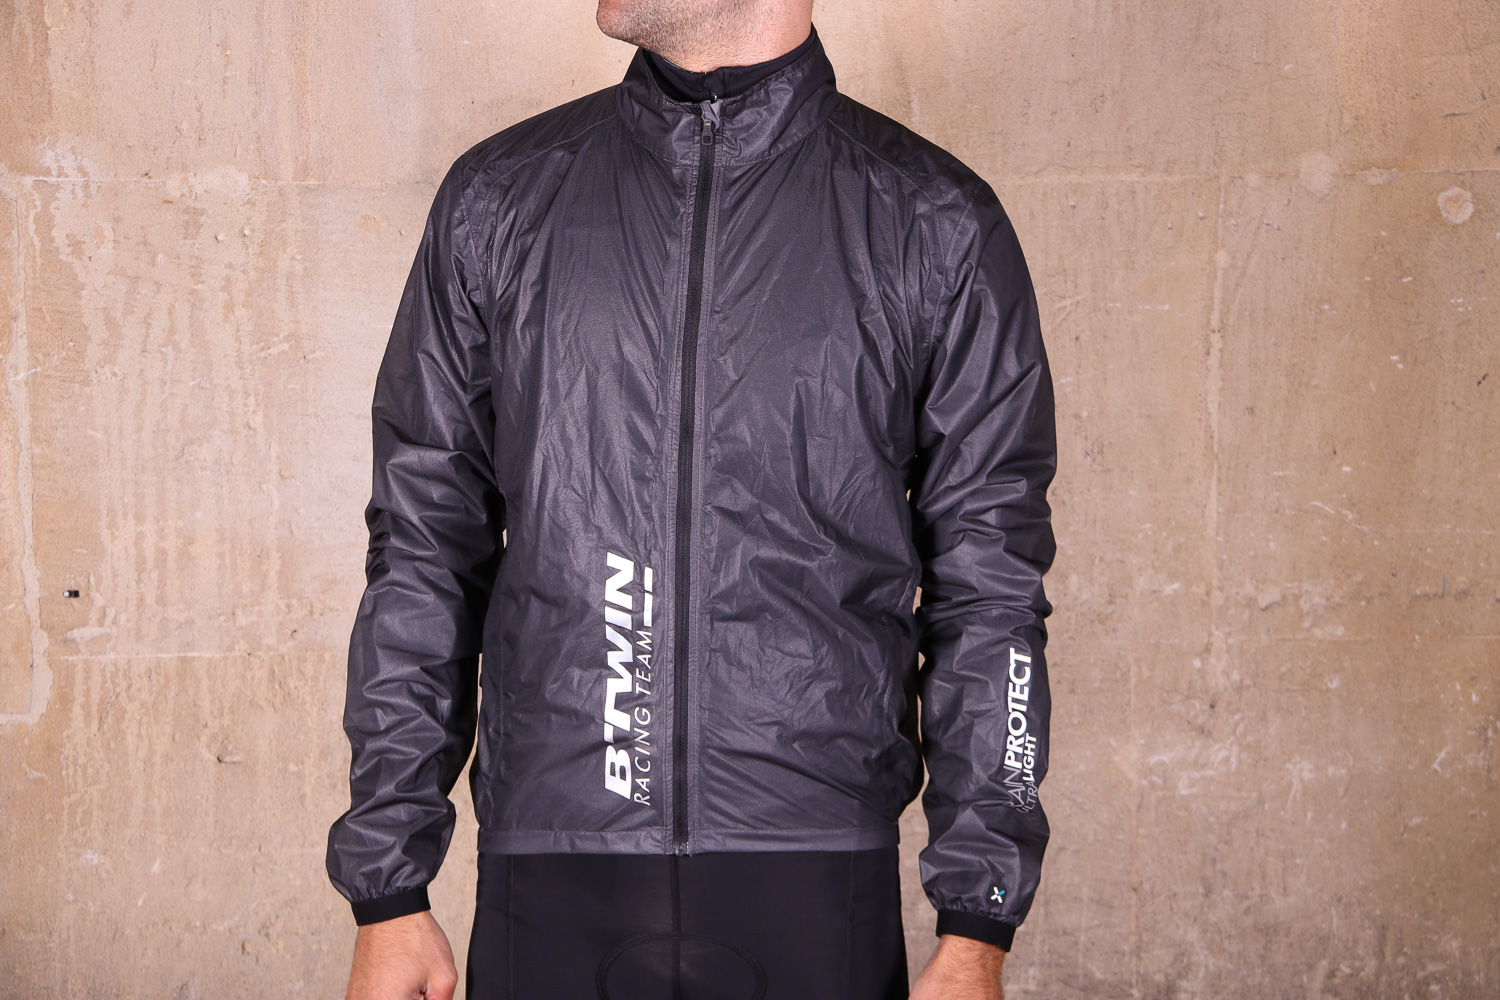 decathlon cycle jacket